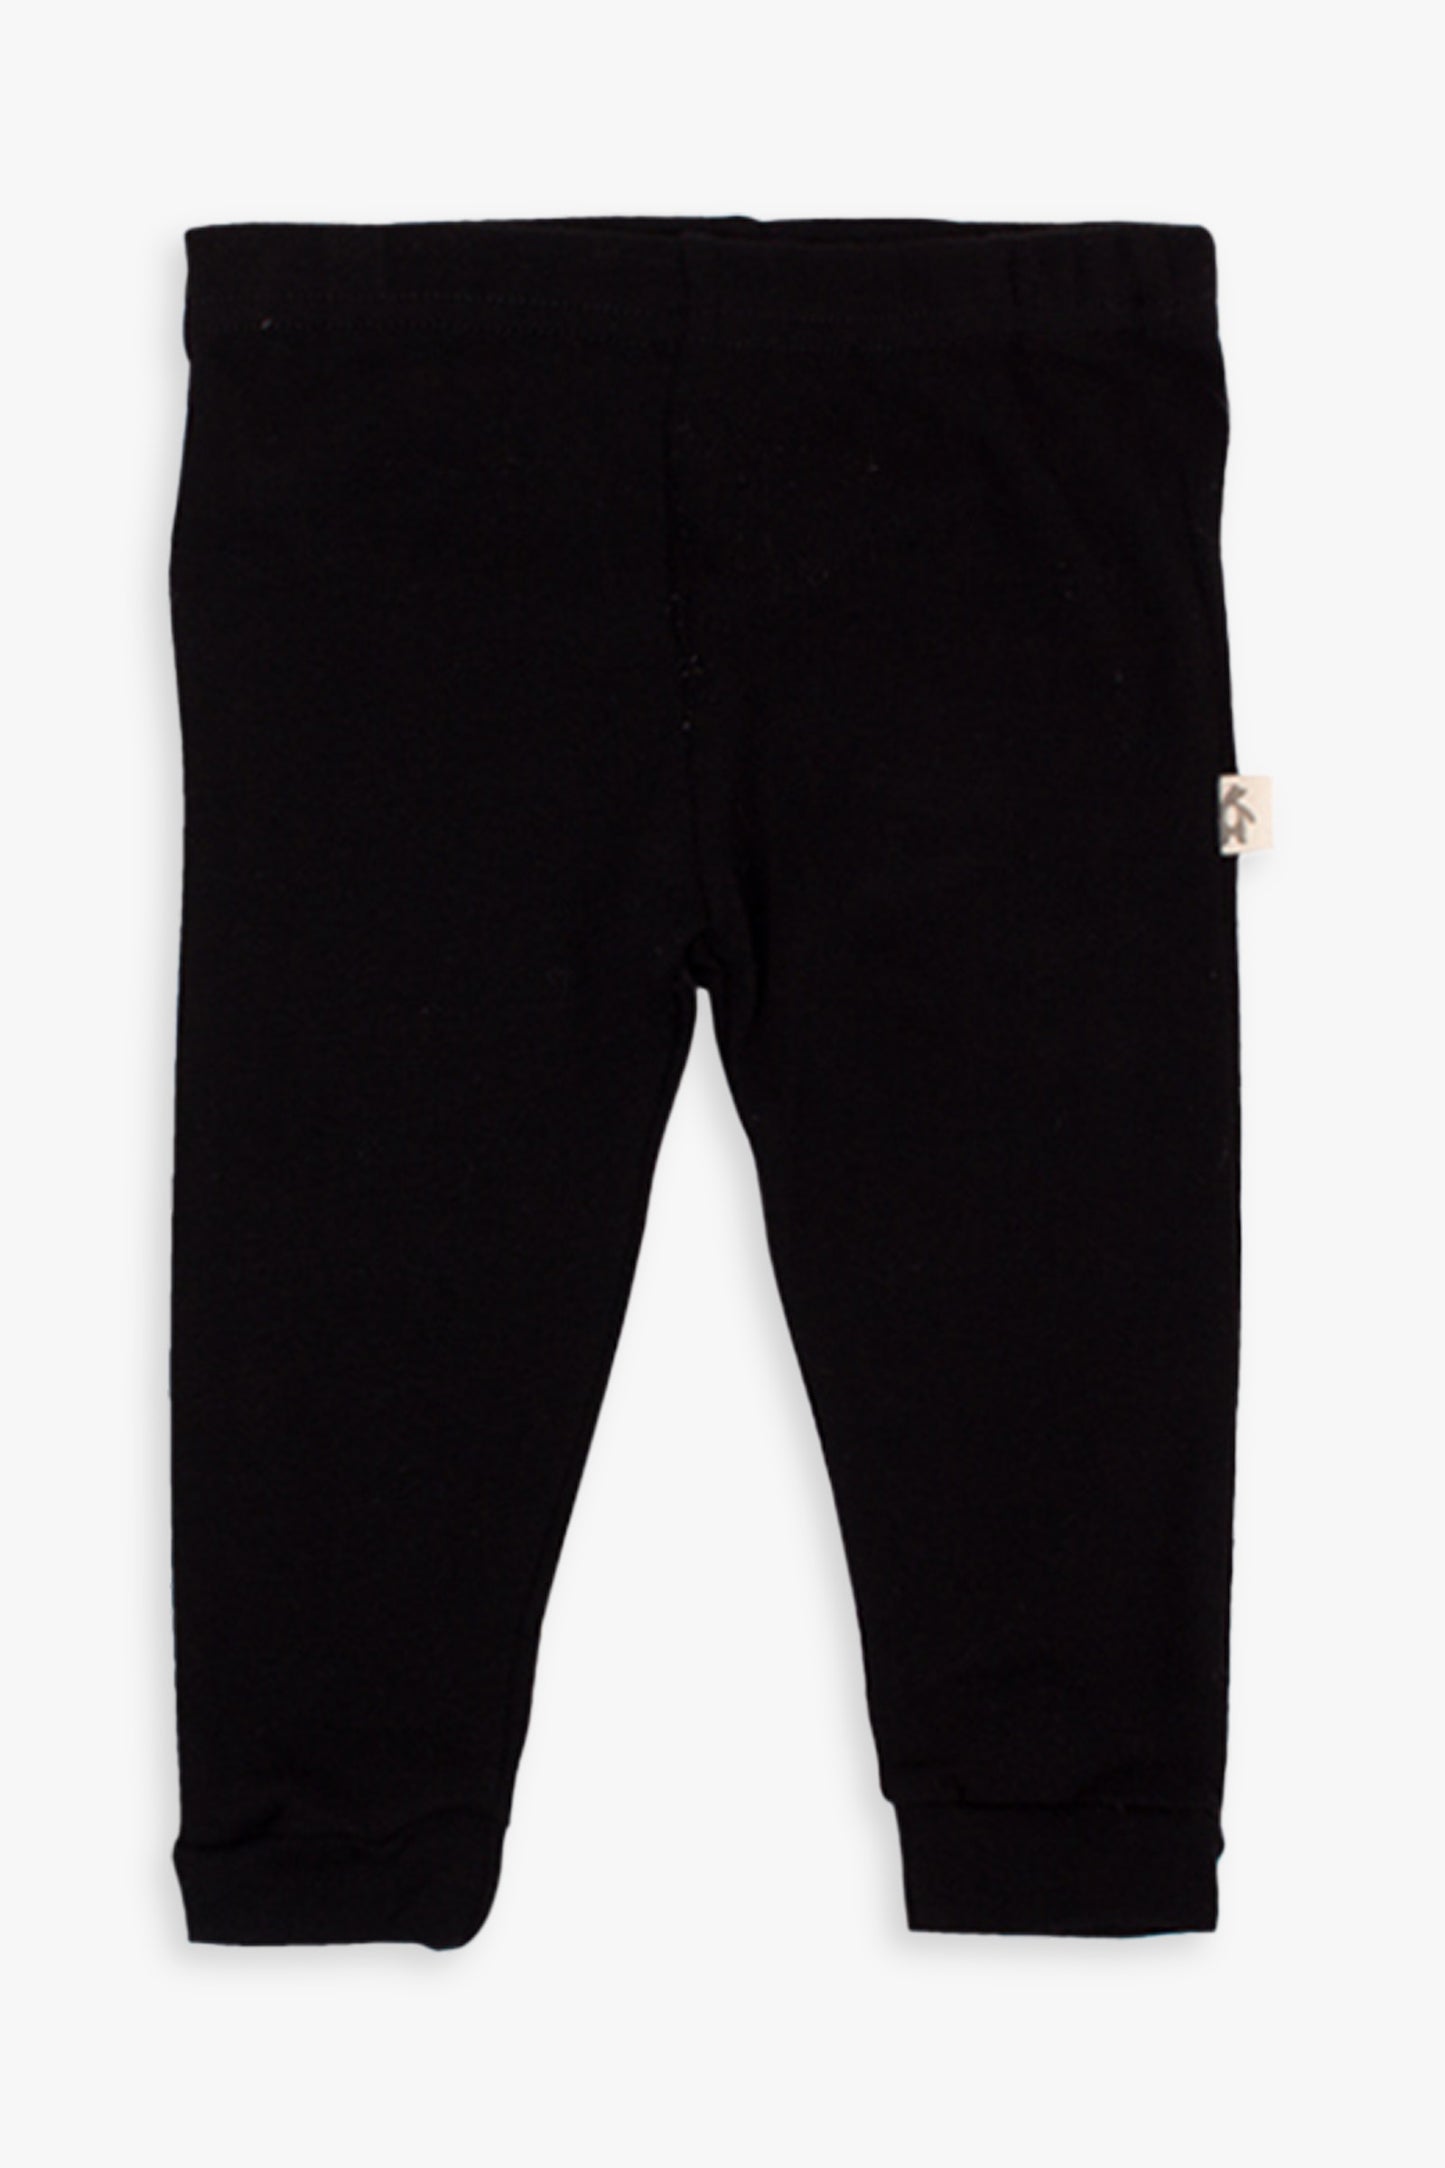 Basic Pants, Black & White Collection